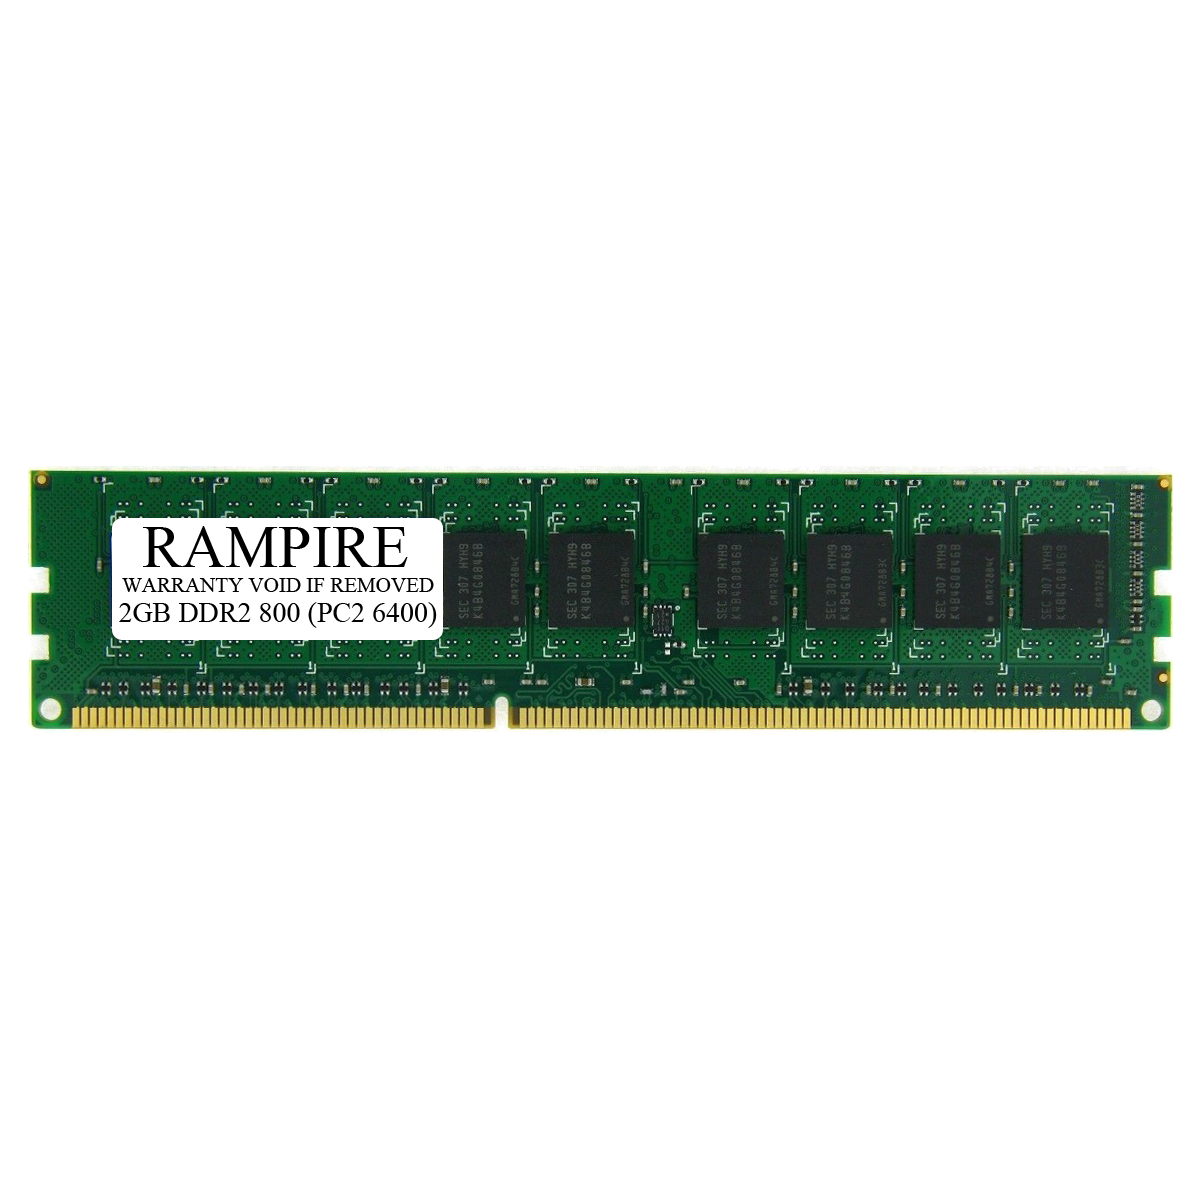 RAMPIRE 2GB DDR2 800 (PC2 6400) 240-Pin SDRAM 2Rx8 Standard Profile 1.8V ECC Unregistered Server Memory